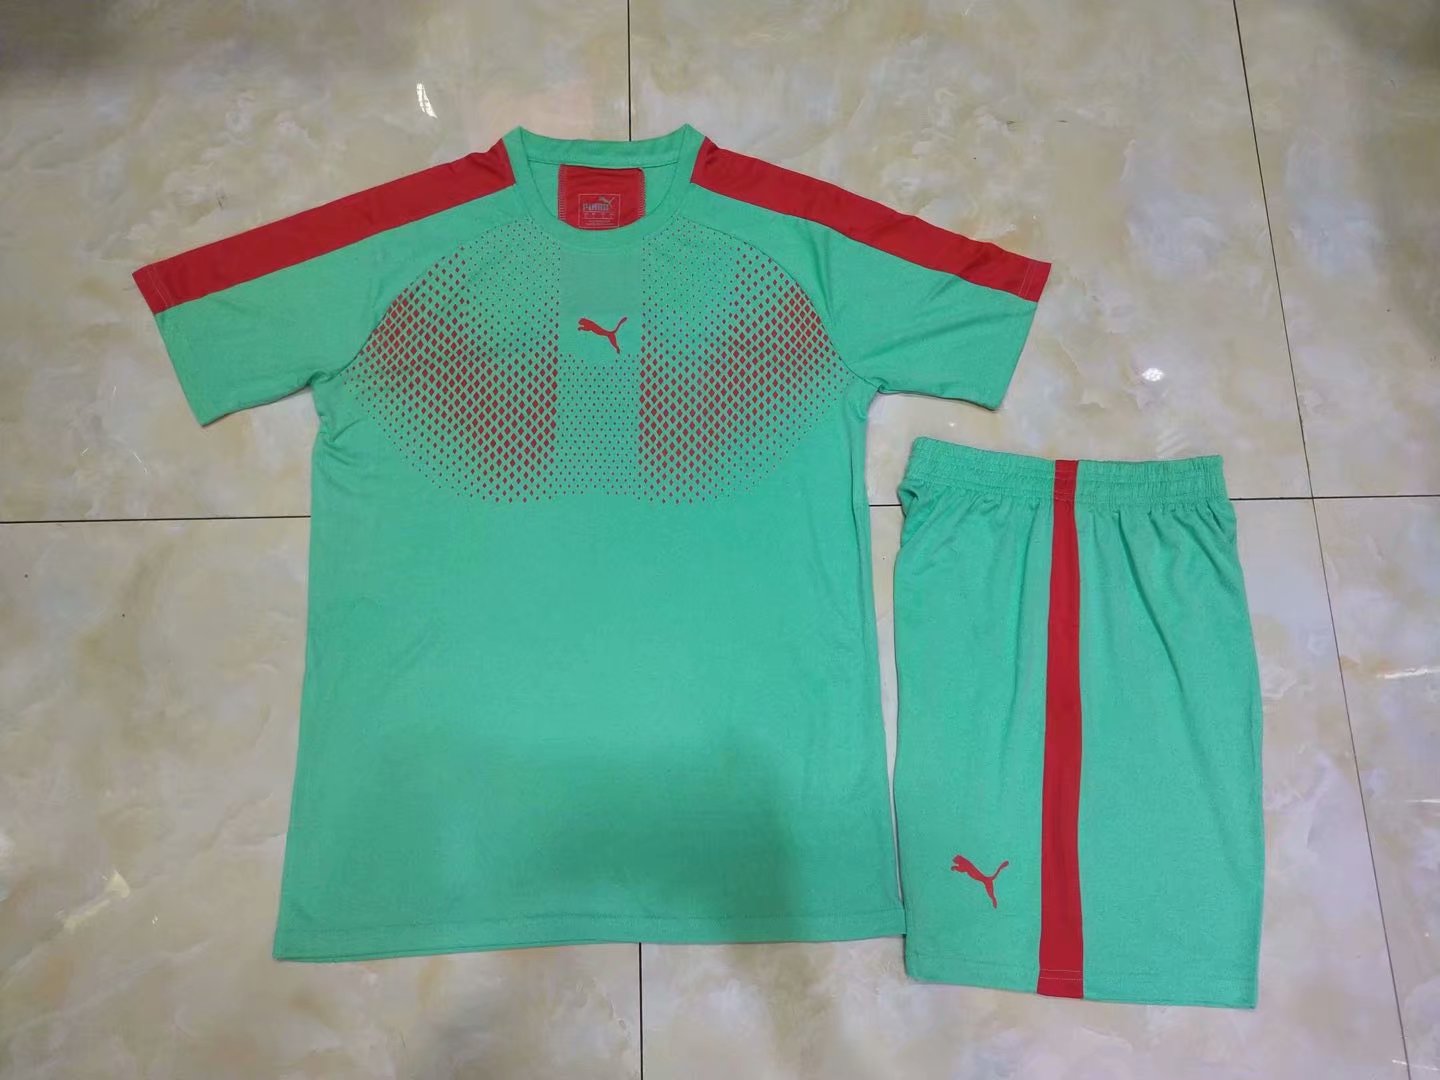 Pum Soccer Team Uniforms 006